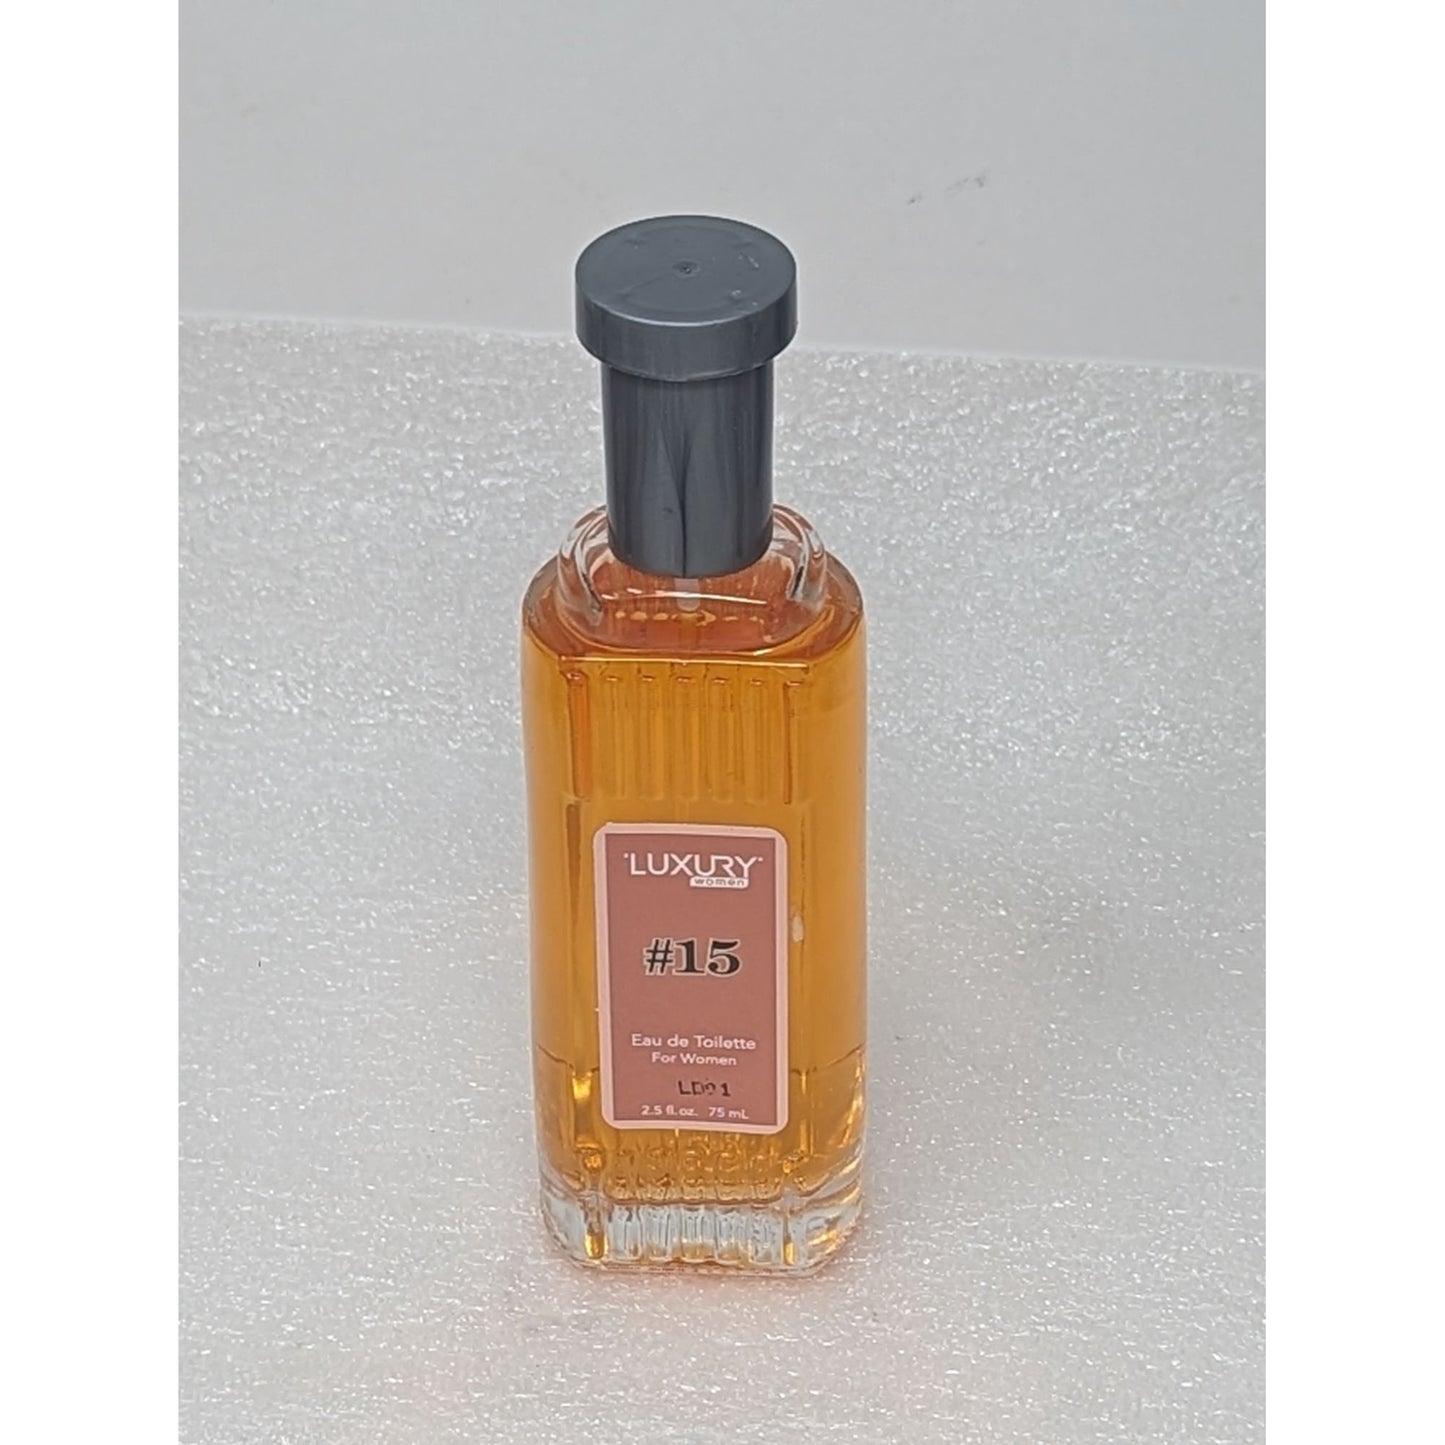 Luxury #15 Eau de Toilette Perfume for Women 2.5 oz